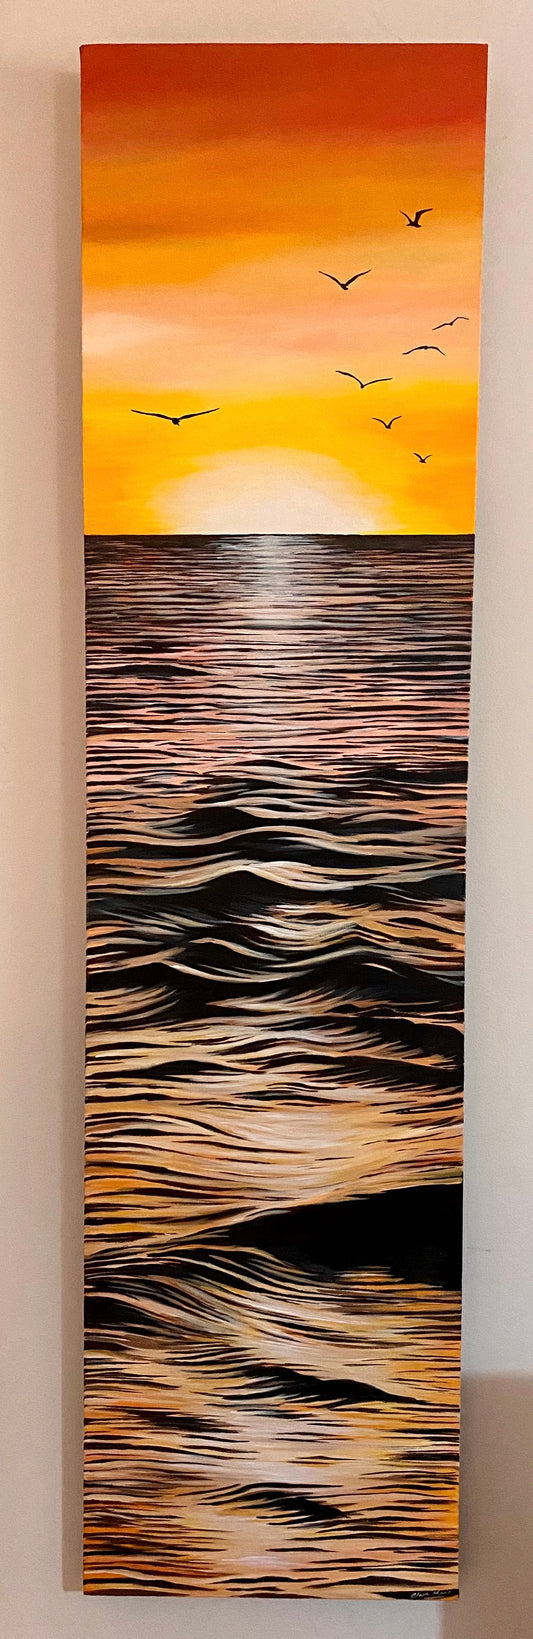 "Serenity" - acrylic on canvas 122 cm x 30 cm